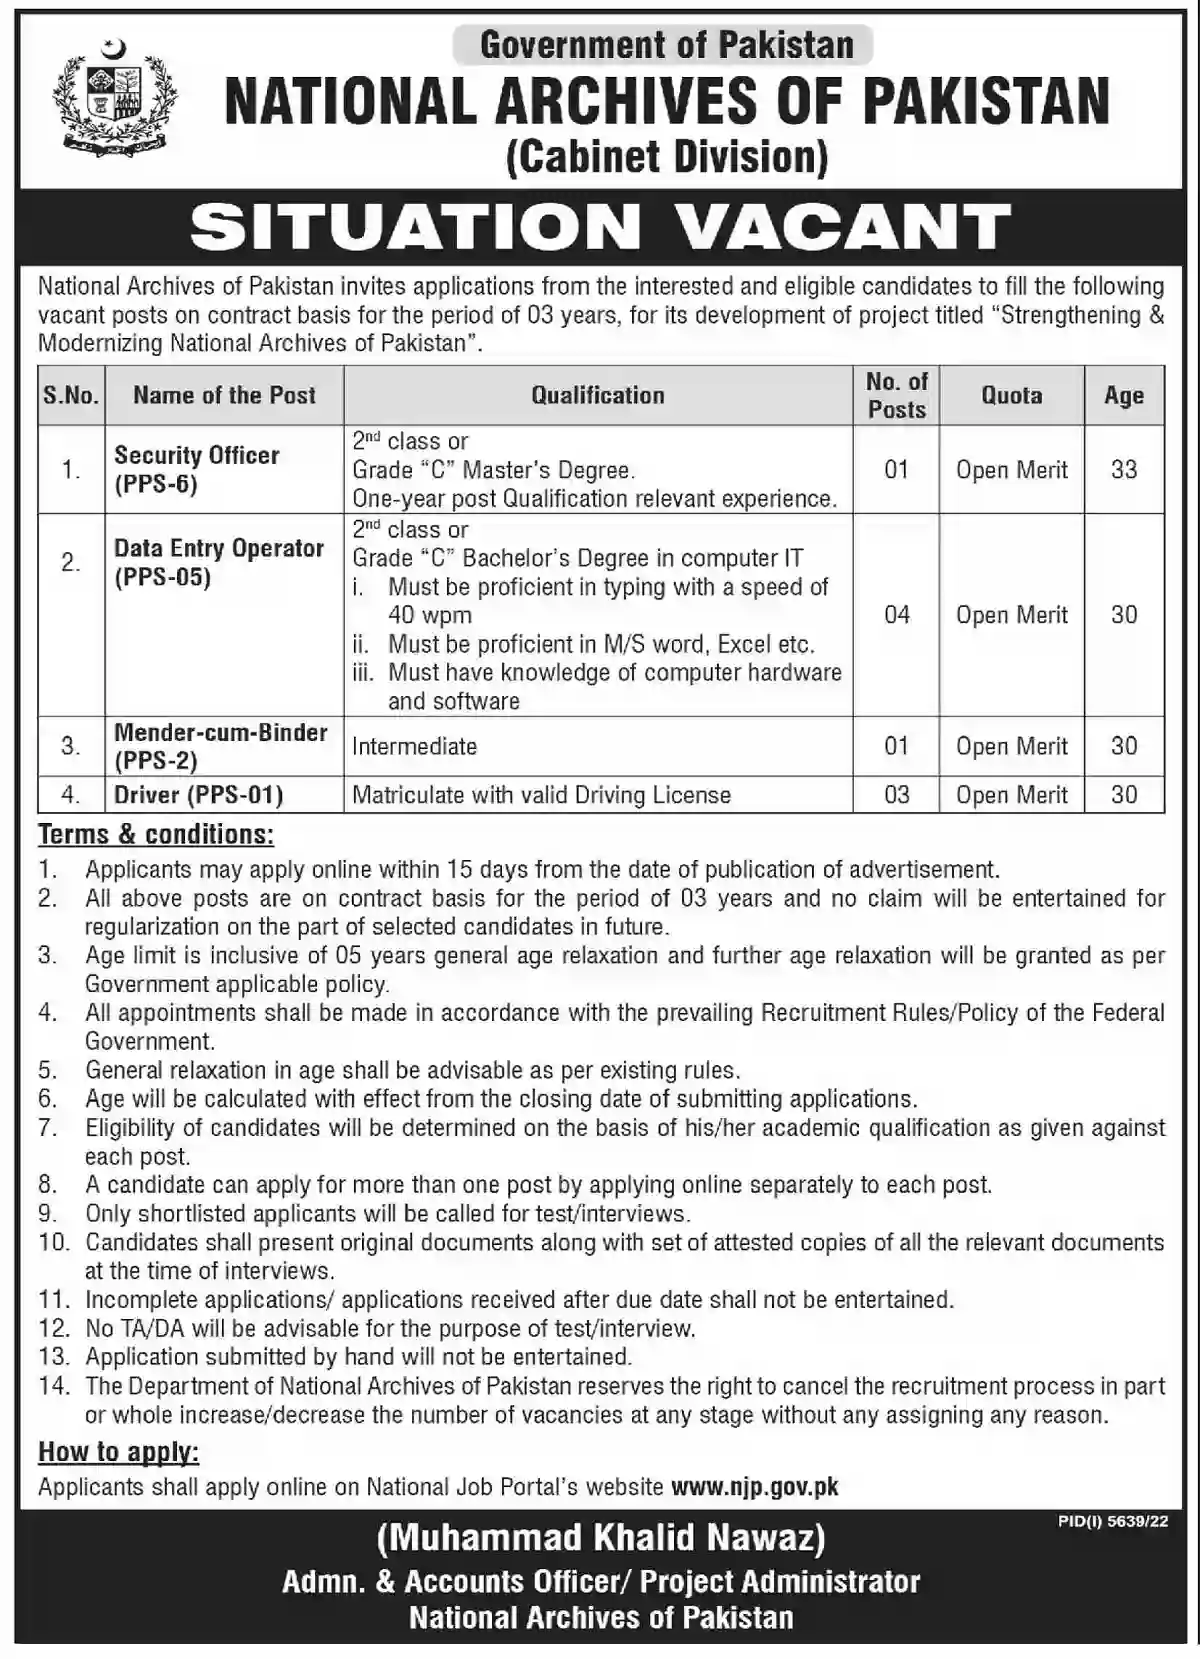 National Archives of Pakistan Jobs 2023 Cabinet Division Apply Online through njp.gov.pk